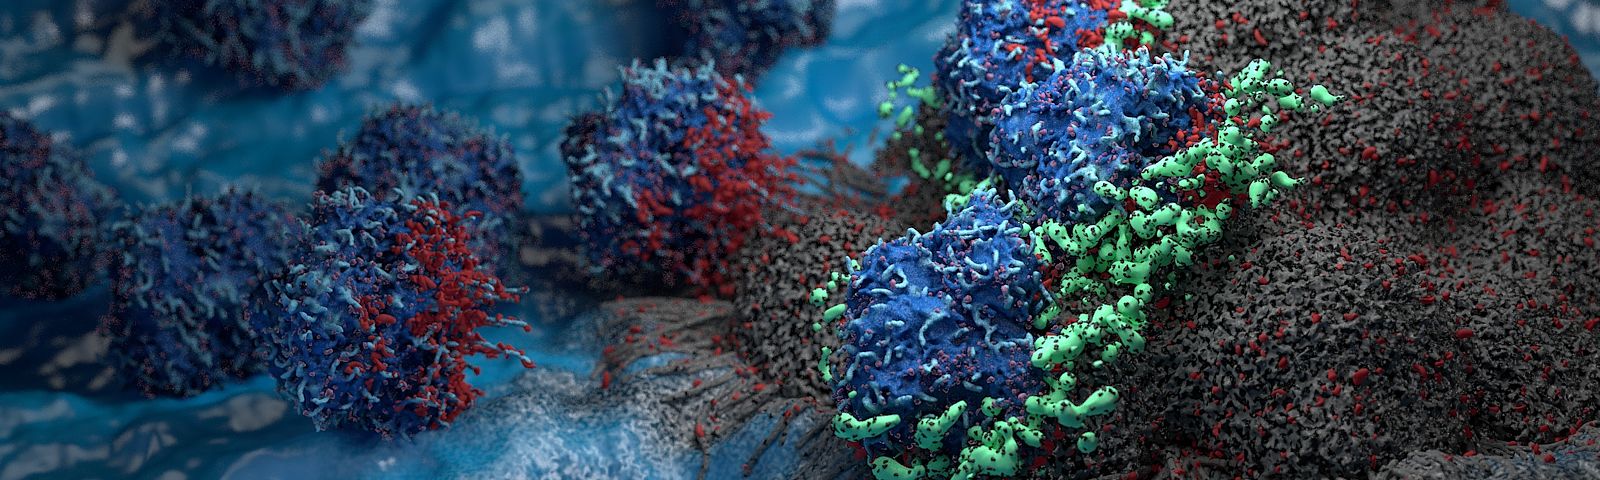 fancy T-cell Tumor environment 3d scientific images